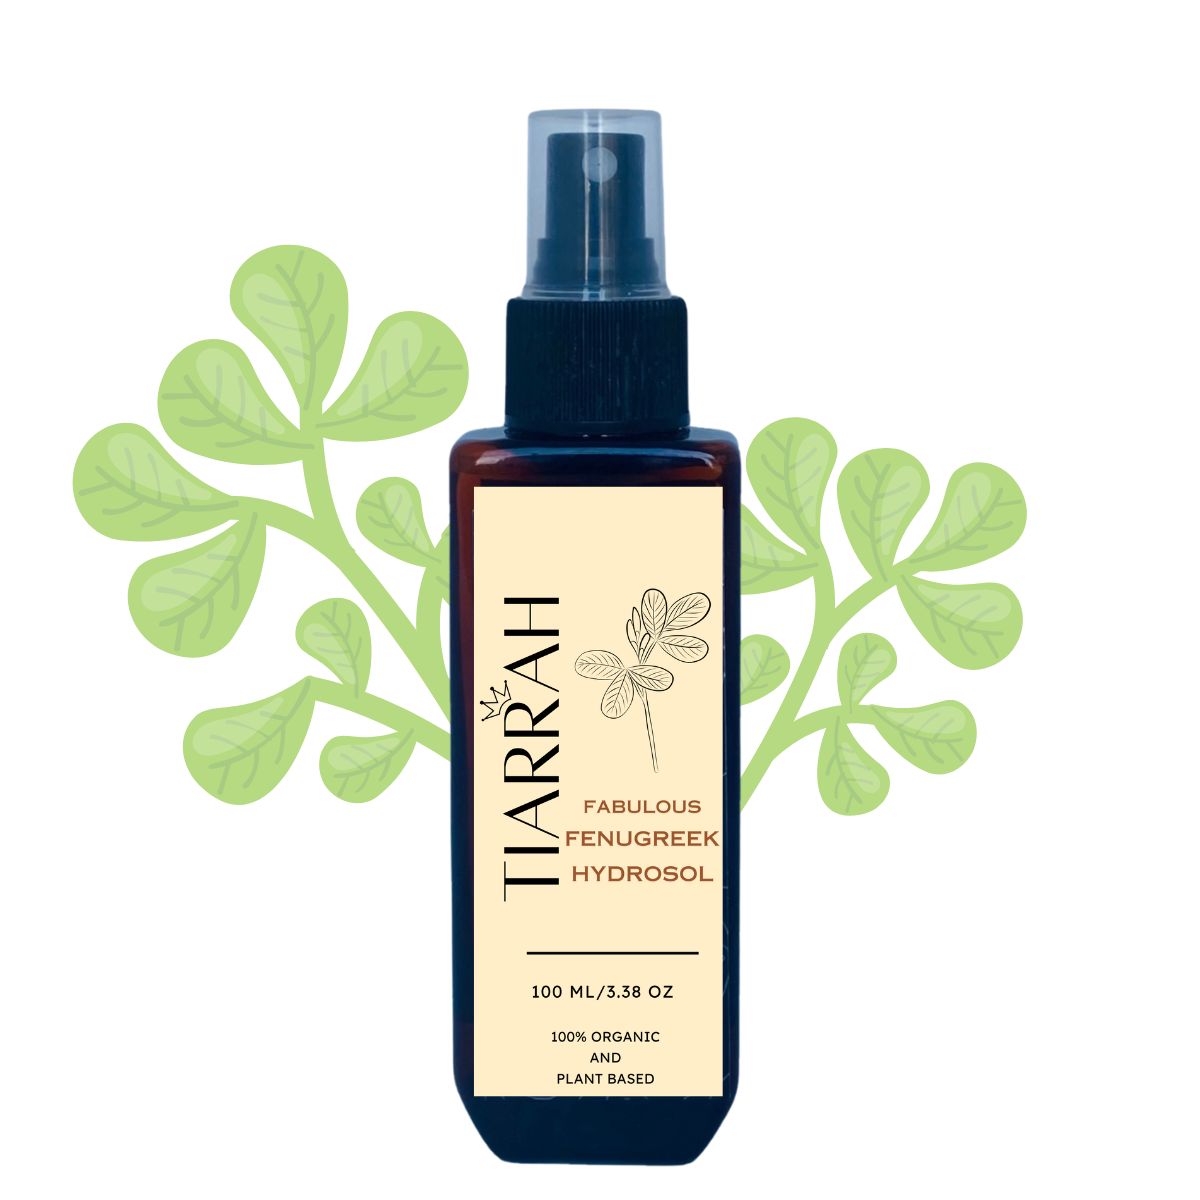 Tiarrah Fenugreek Hydrosol: Natural, Organic, Non-Toxic Hair Mist - The Luxury Bath and Body Care Shop